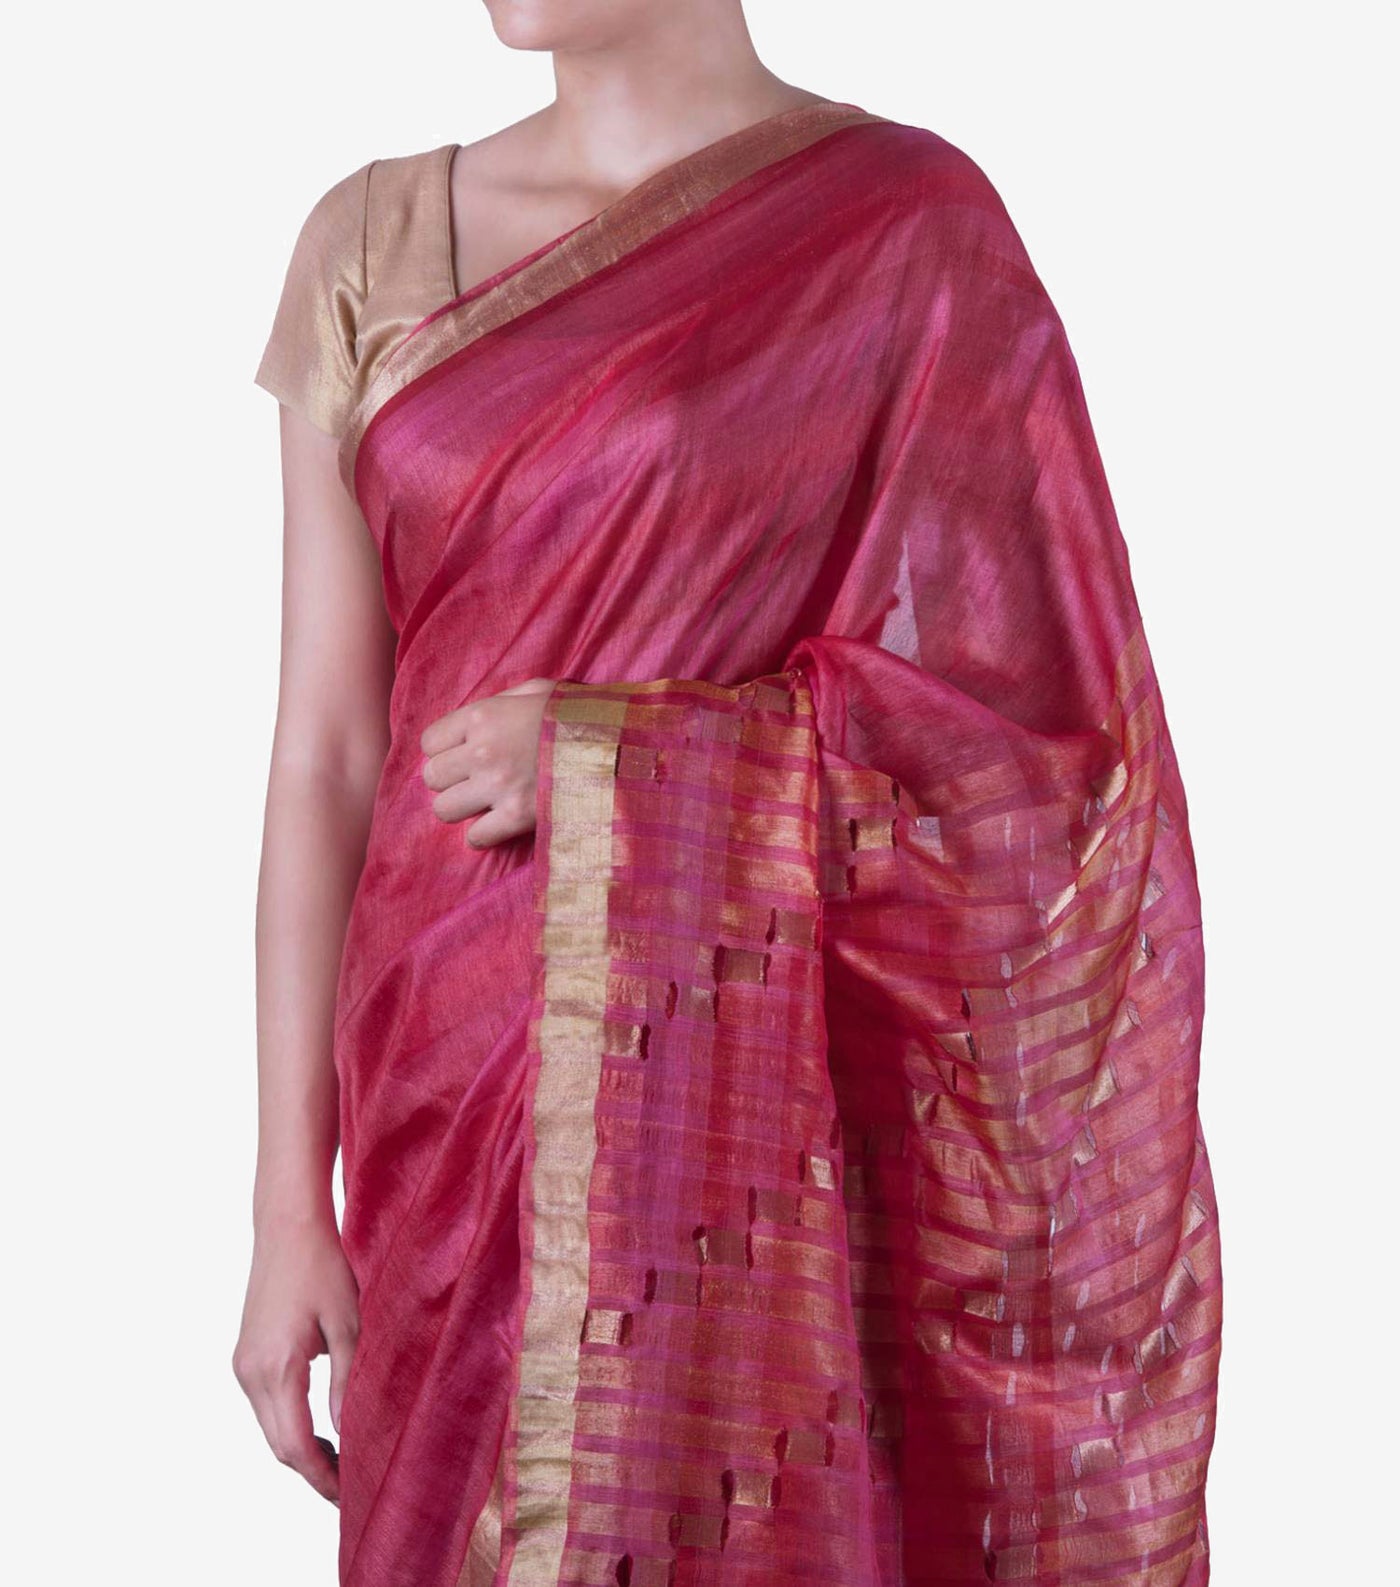 Redish-Pink handwoven Cotton jamdani Saree